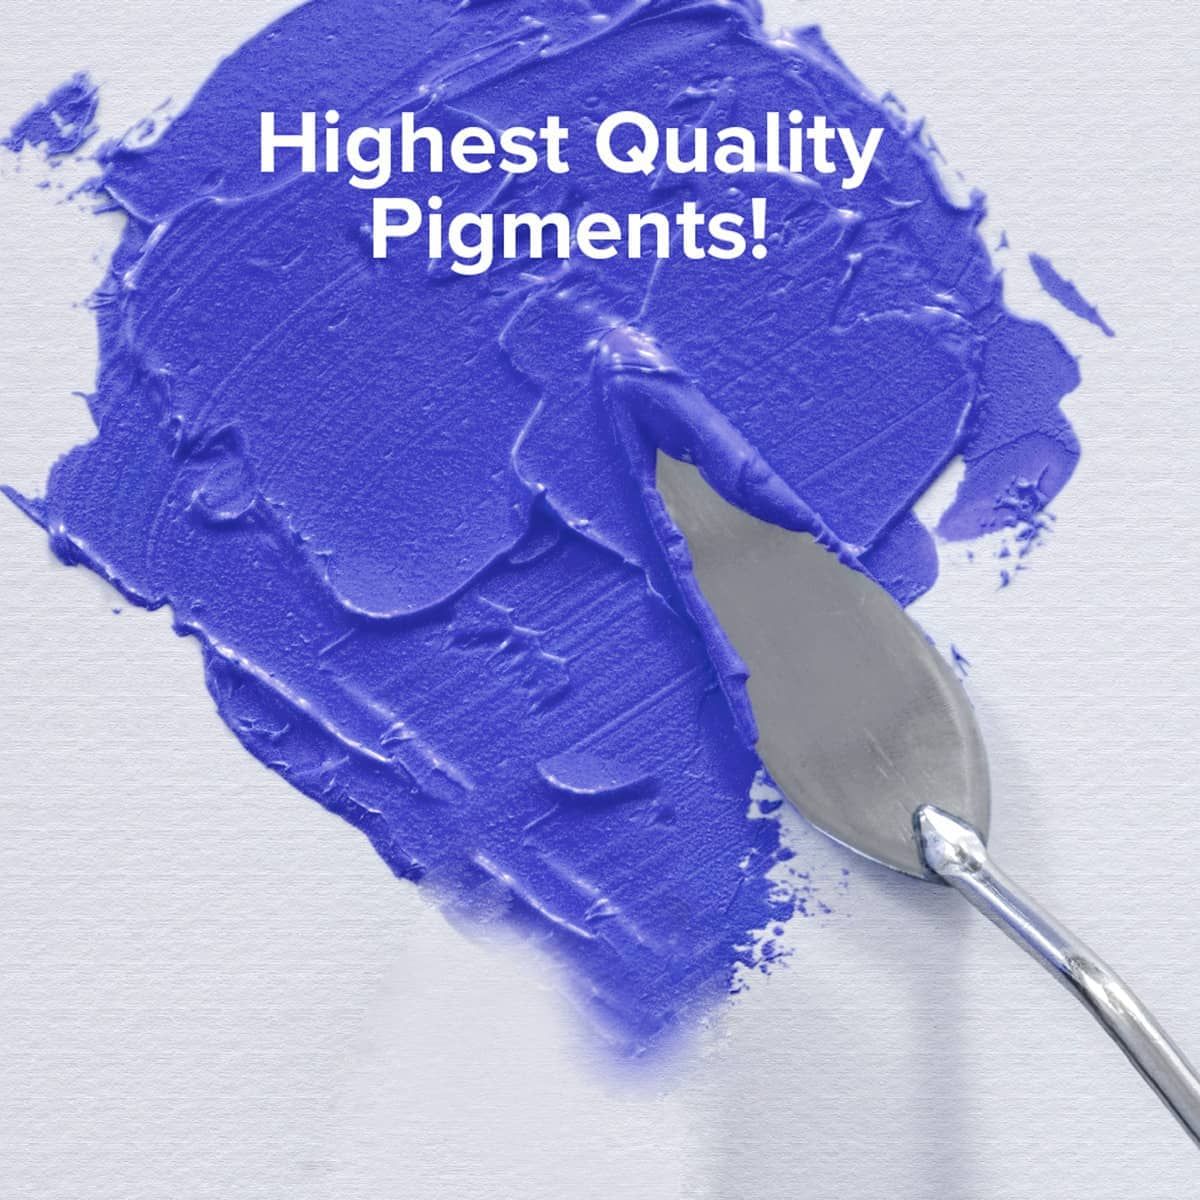 Highest Quality Pigments